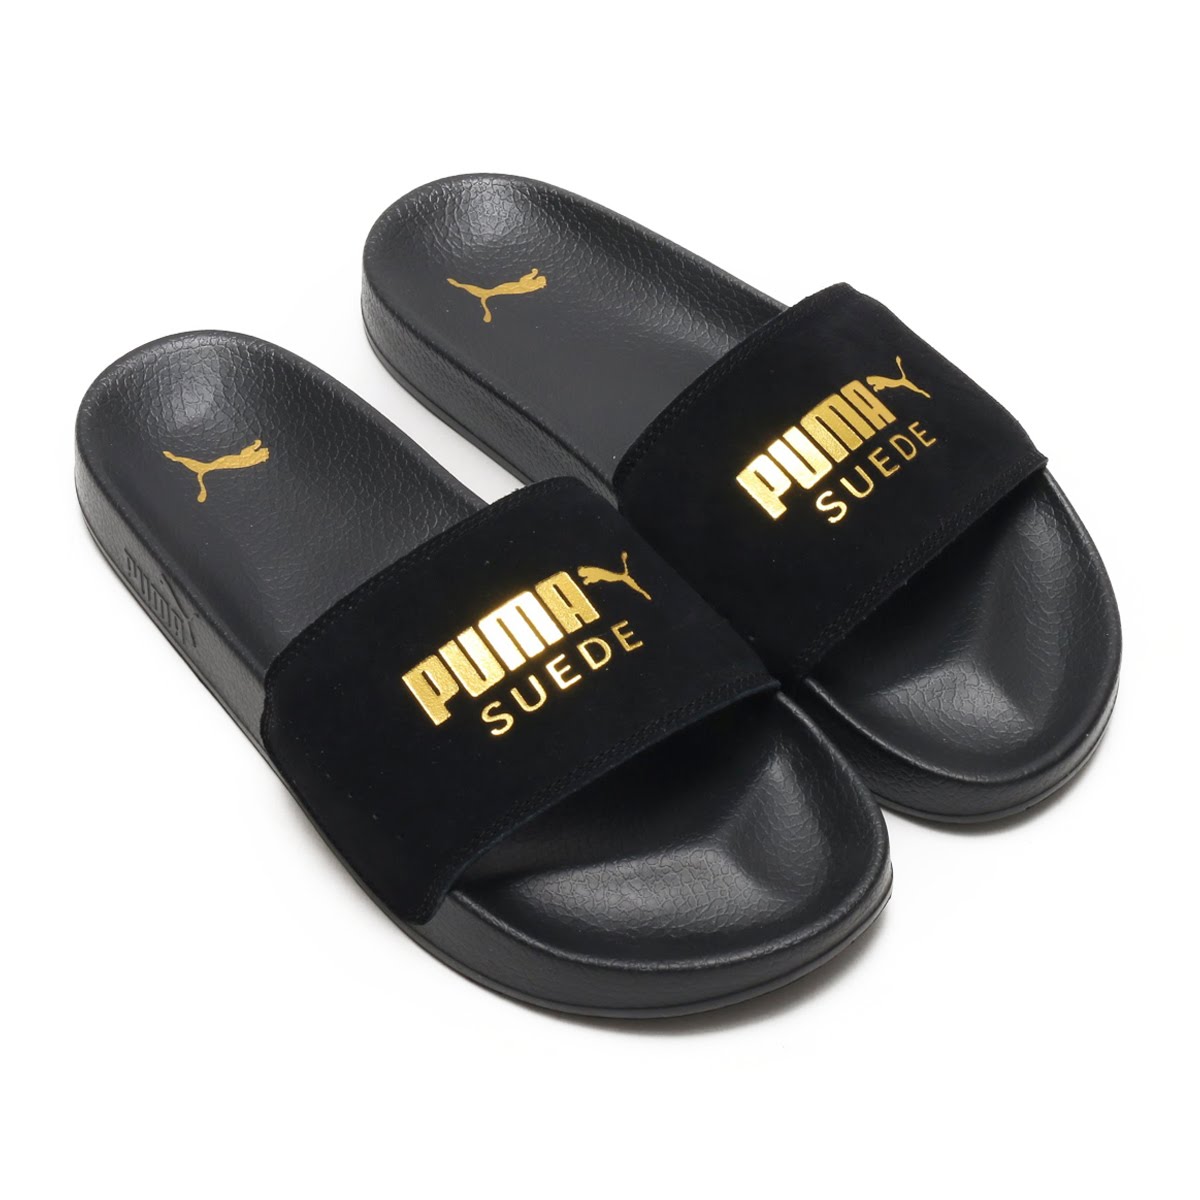 puma men's leadcat suede slide sandal